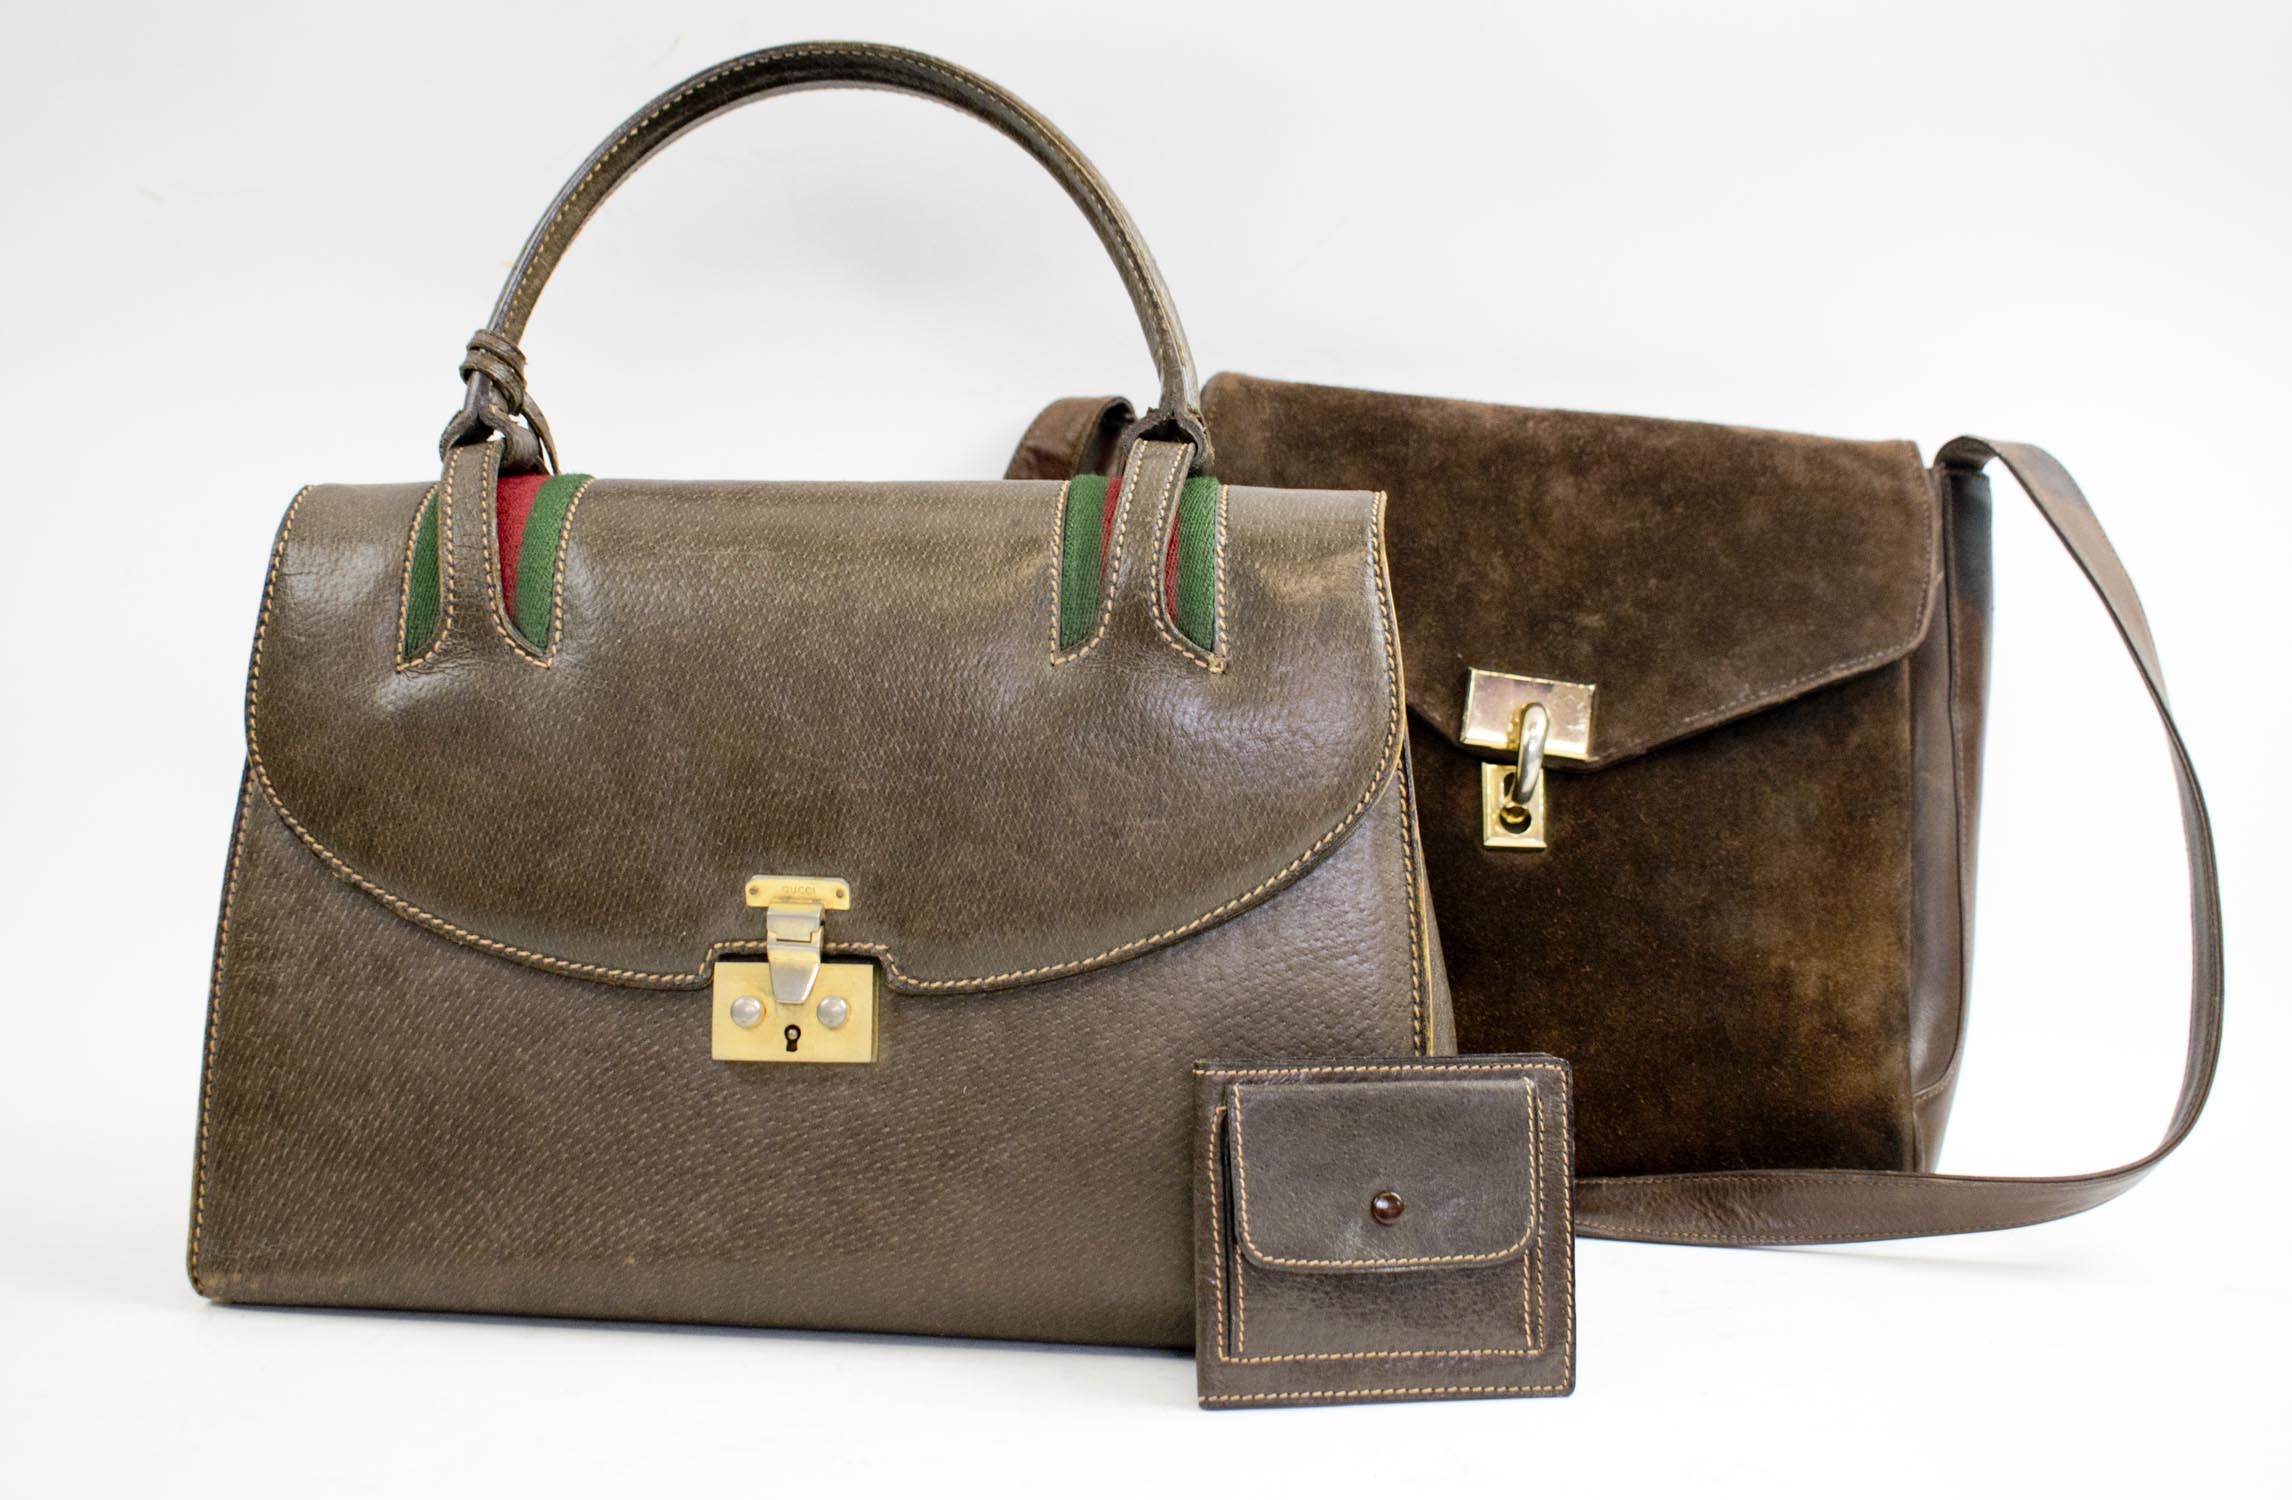 Vintage Gucci Leather Handbag with Carved Wood Handle